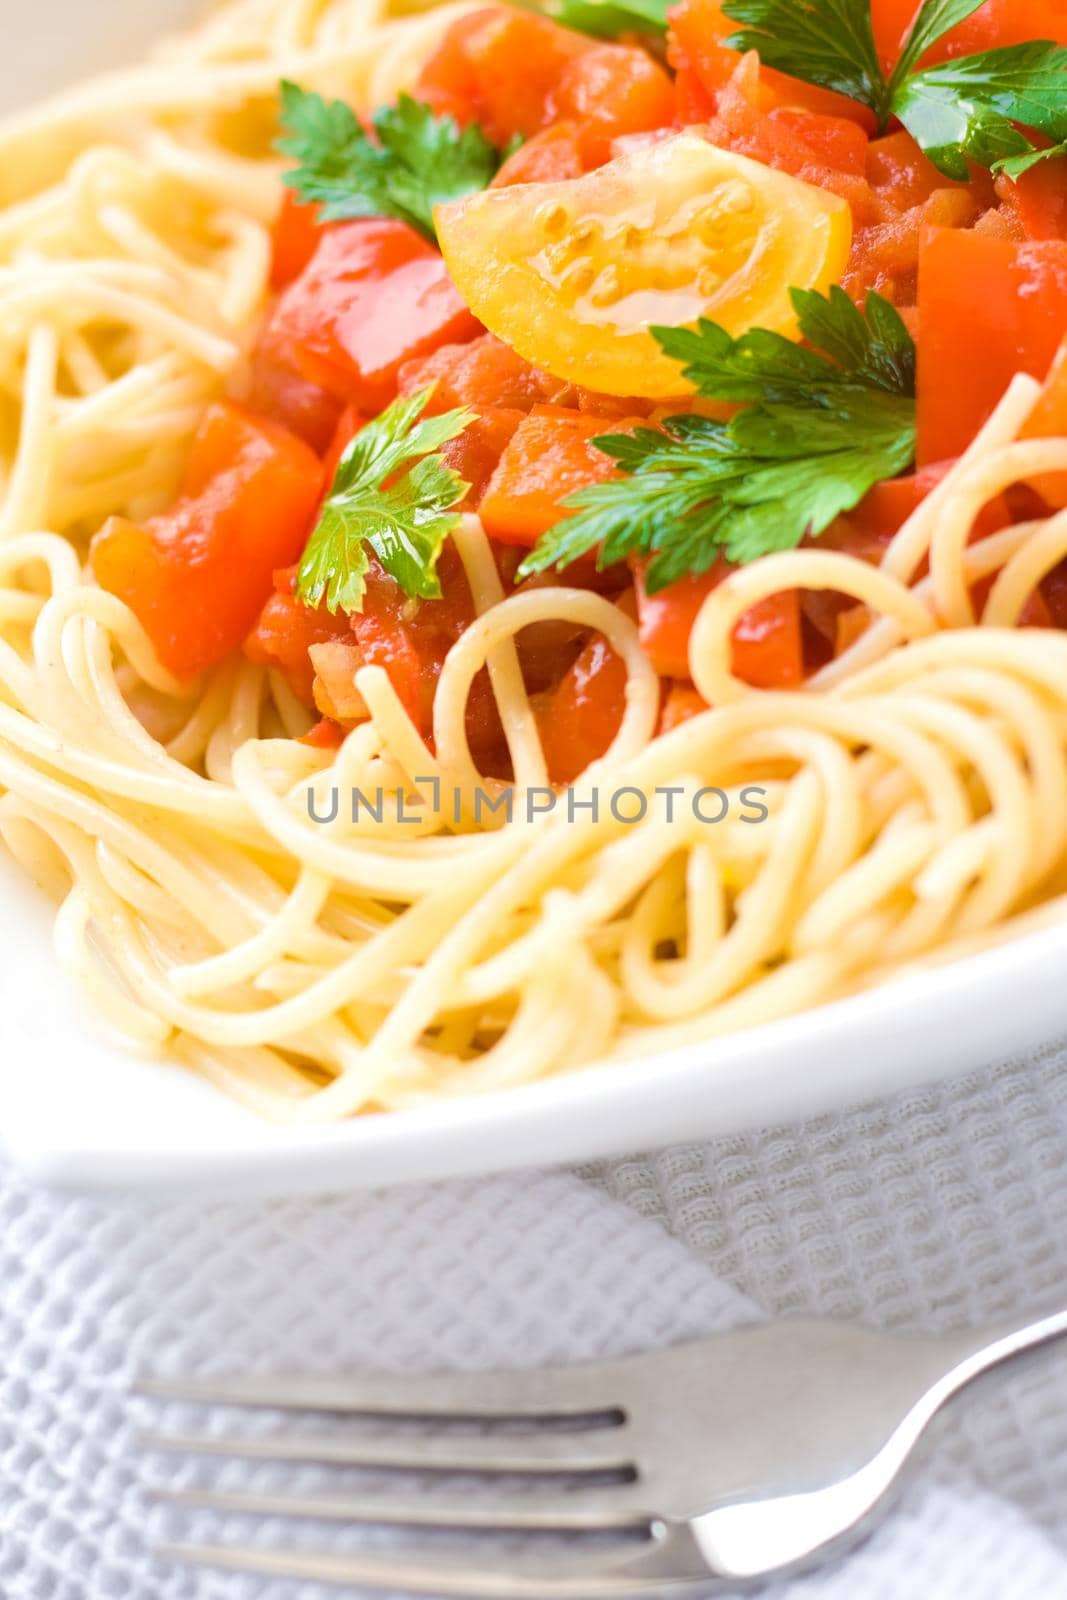 spaghetti with tomato sauce - pasta and italian cuisine recipes styled concept, elegant visuals